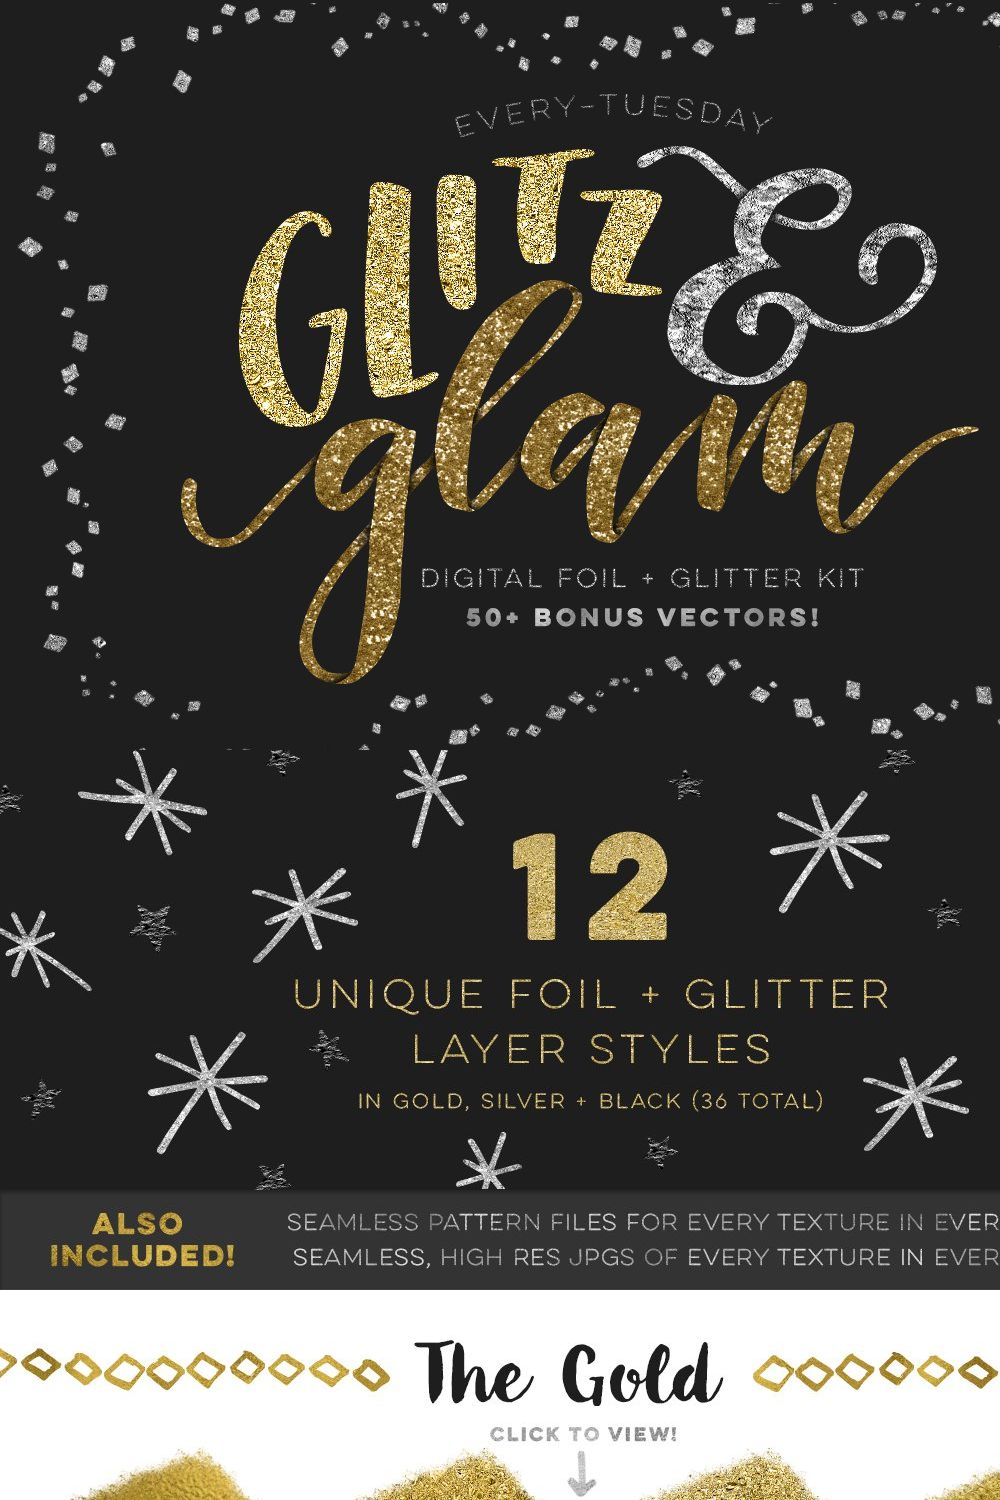 Glitz + Glam Kit pinterest preview image.